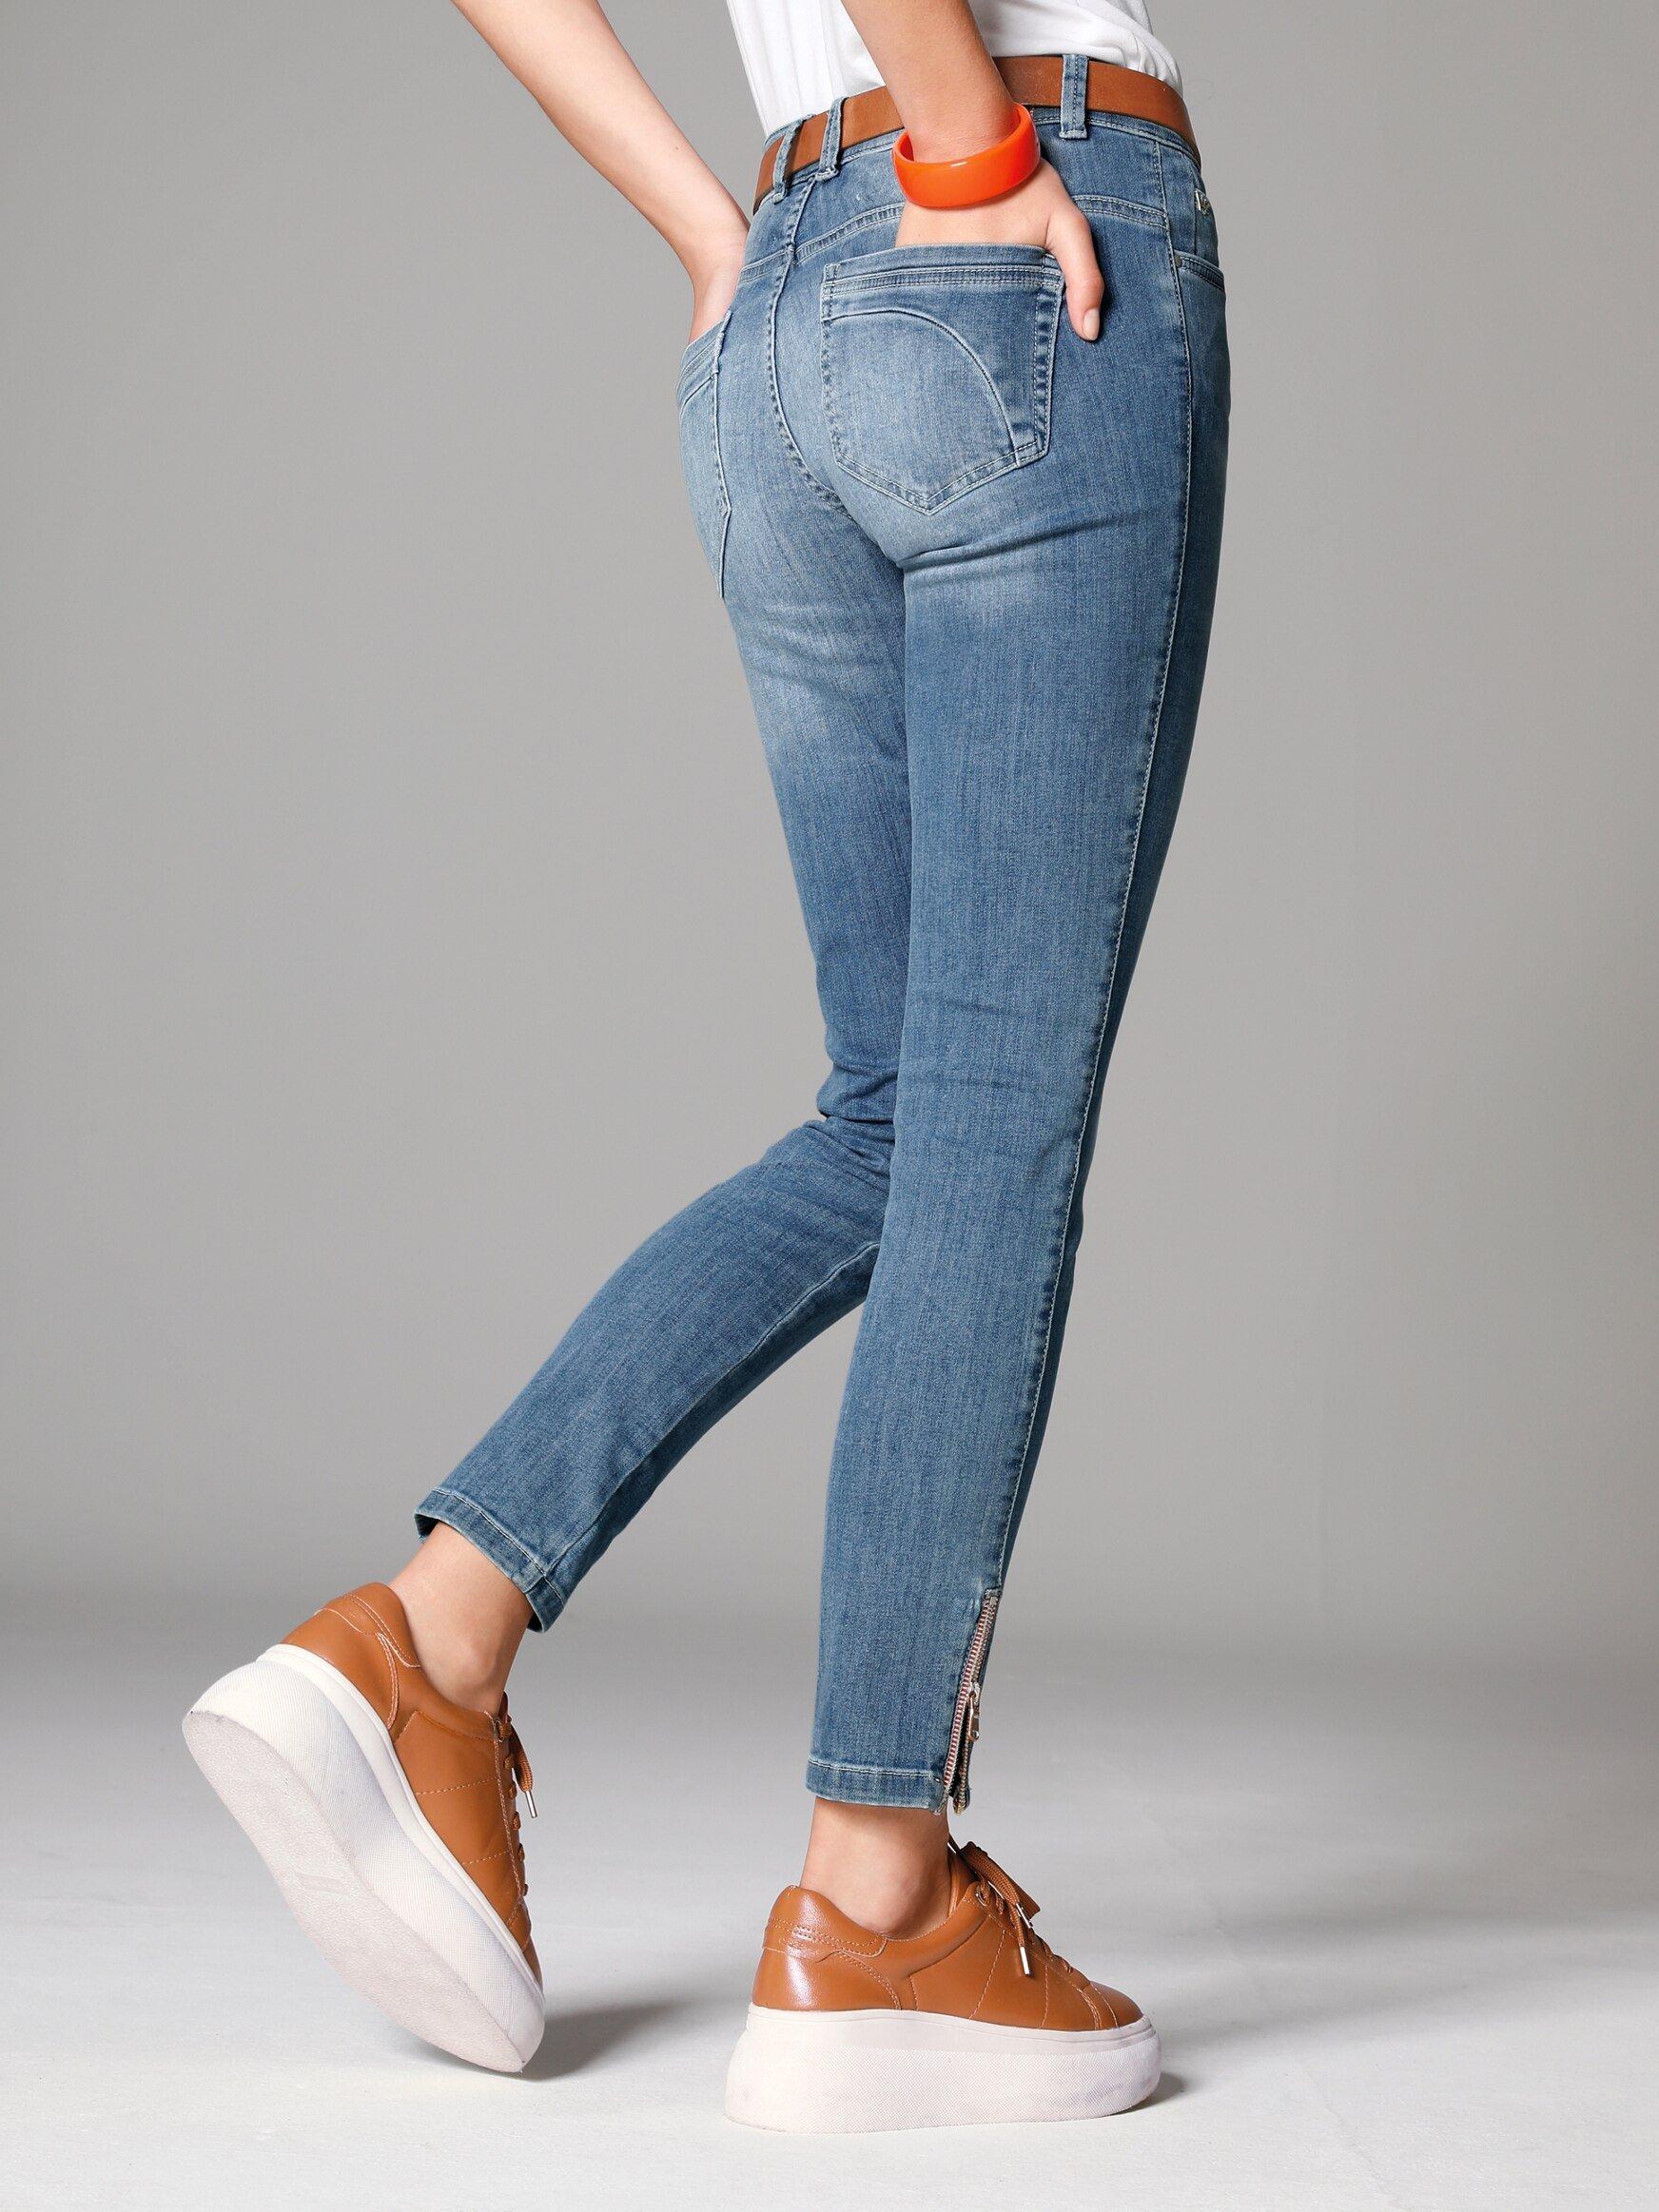 ankle design jeans